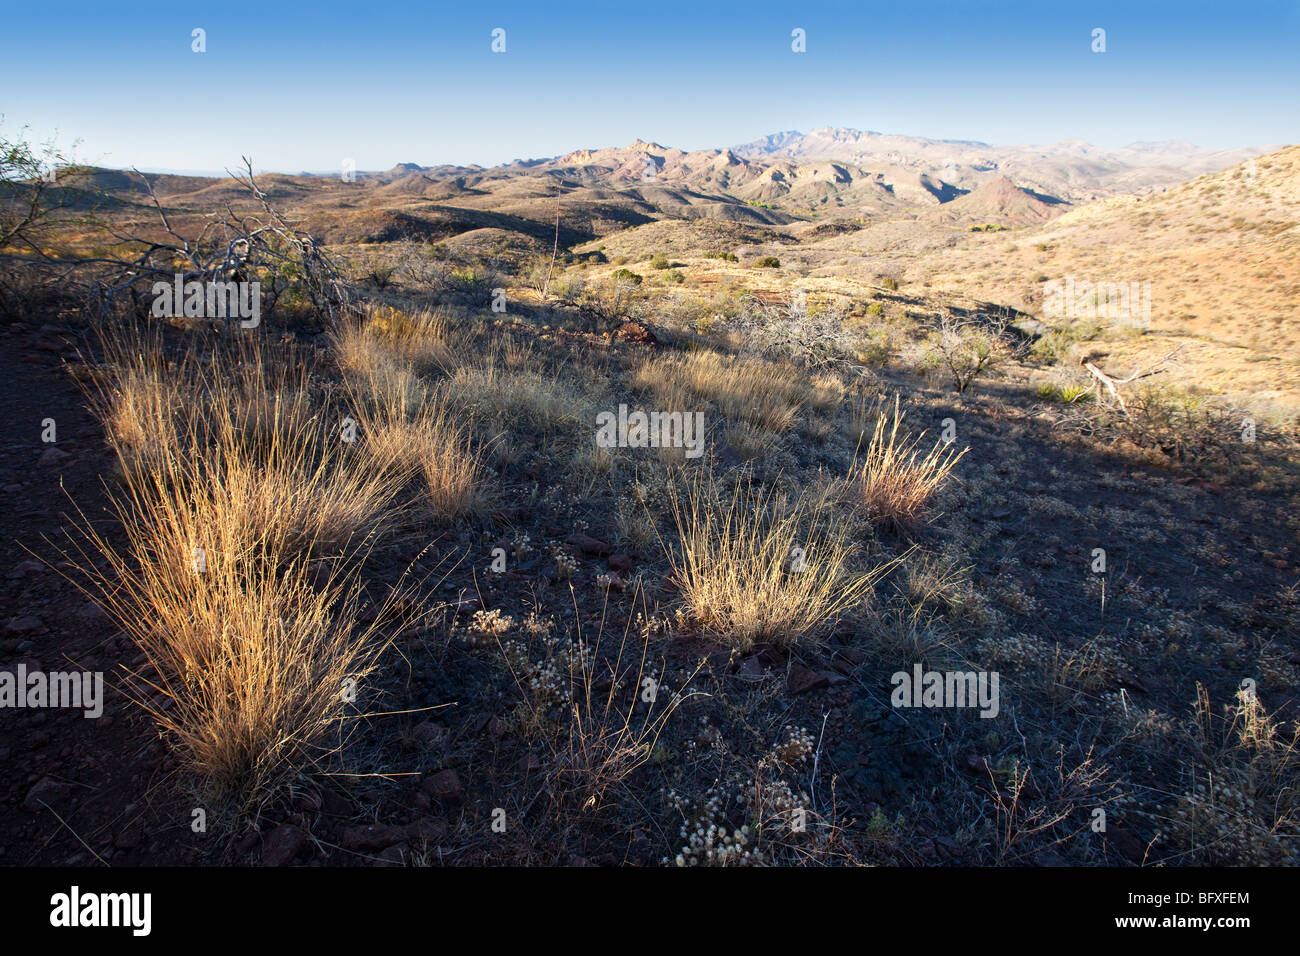 Galiuro Mountains and native grasses seen along the scenic Vista Trail, Muleshoe Ranch, Arizona Stock Photo